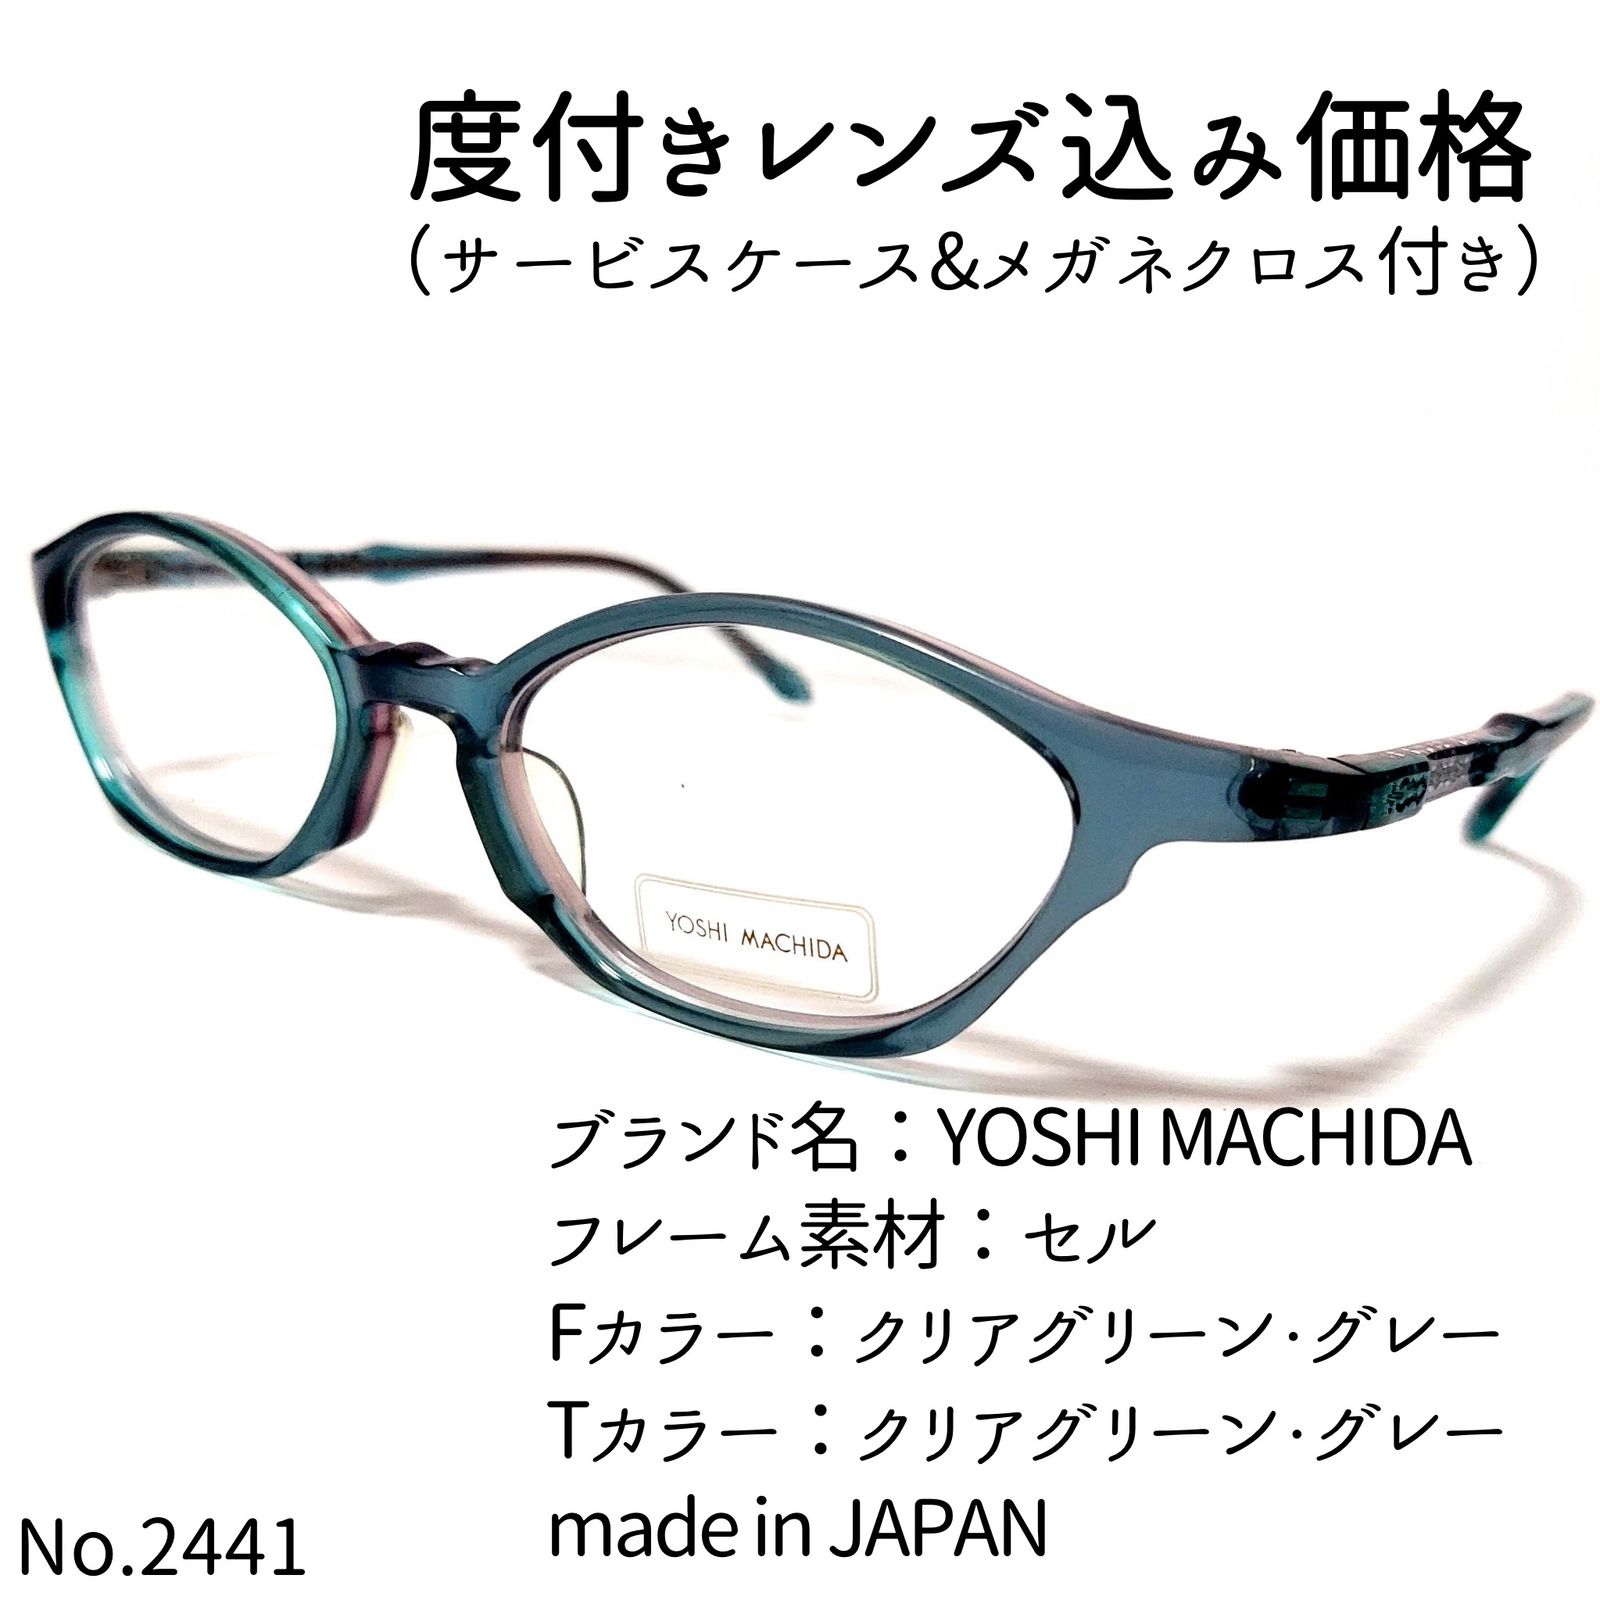 No.2441+メガネ YOSHI MACHIDA【度数入り込み価格】-